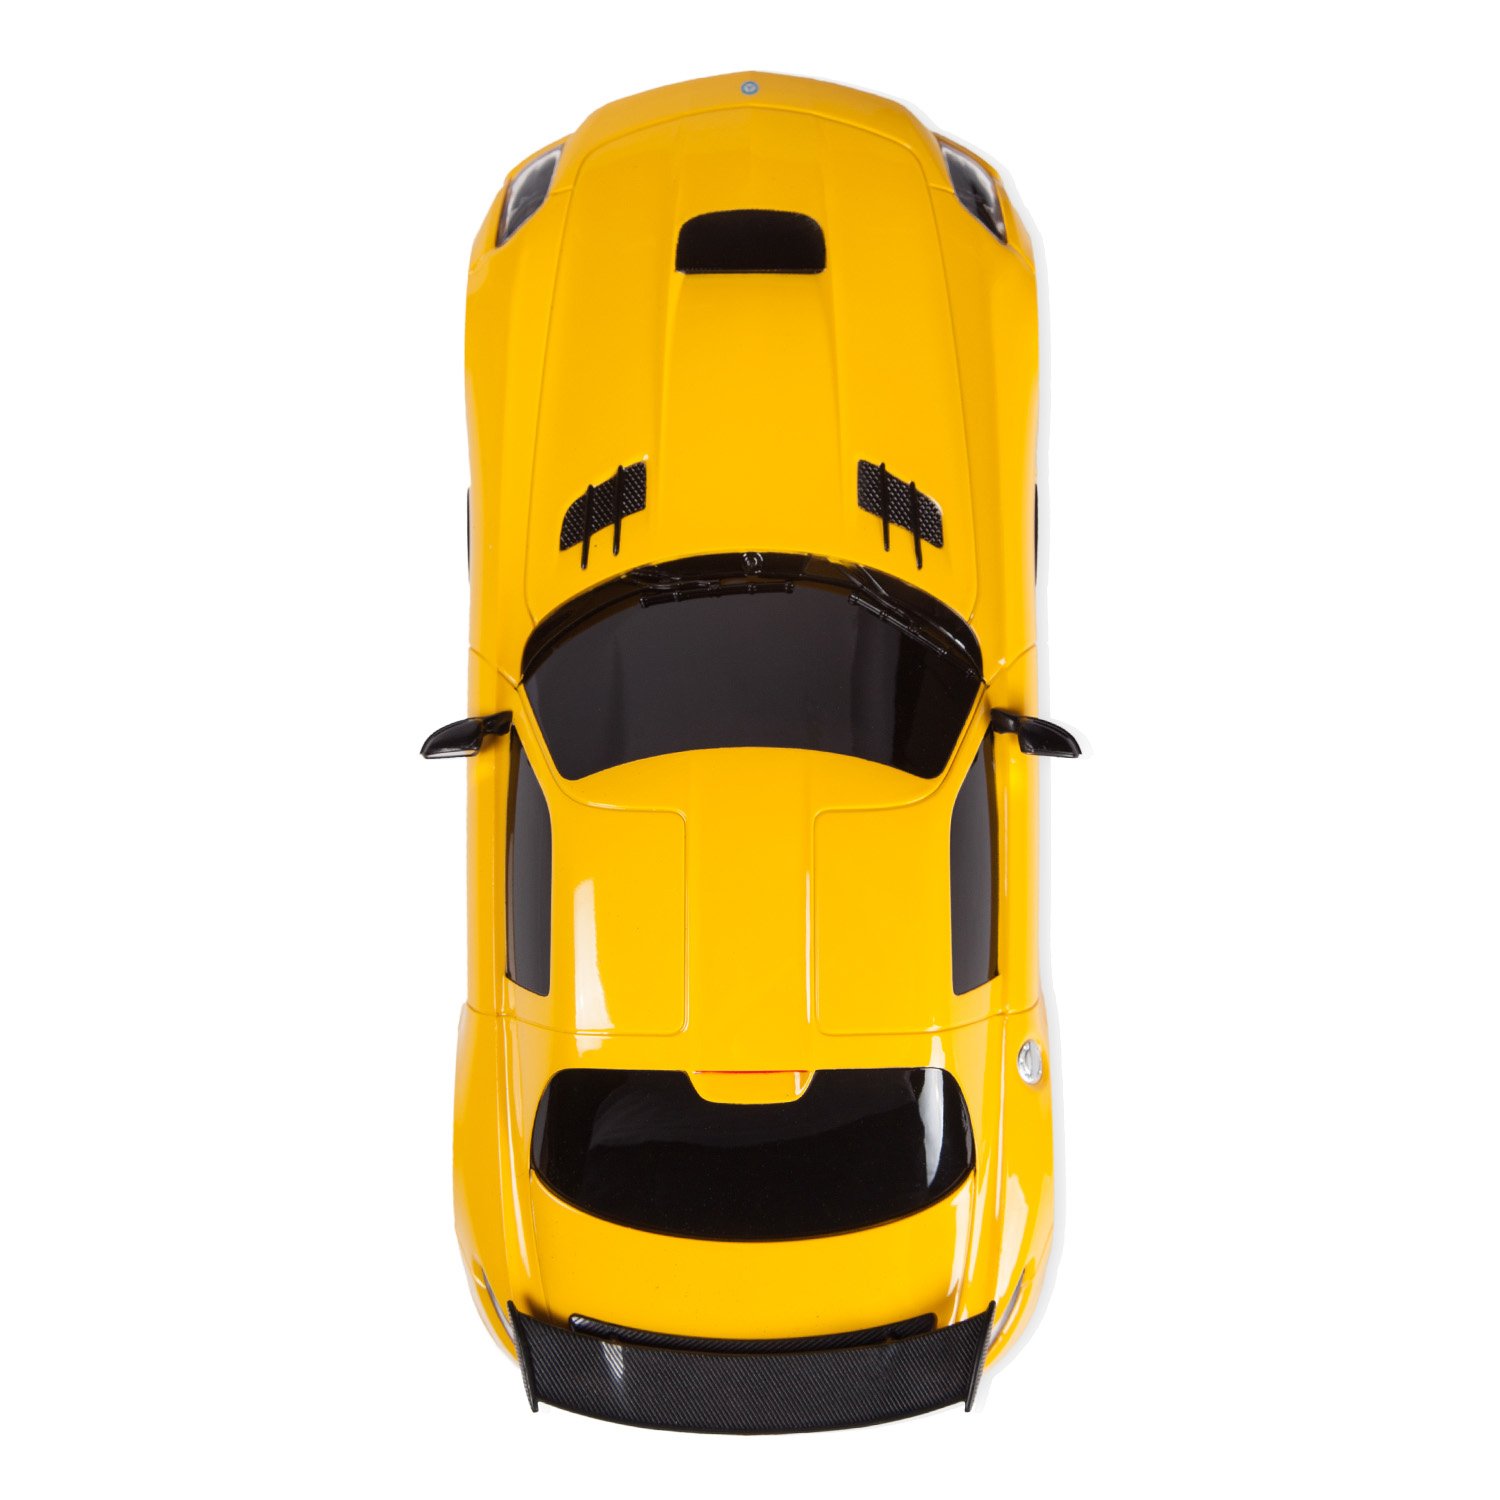 Машинка р/у Rastar Mercedes-Benz SLS BS 1:18 желтая